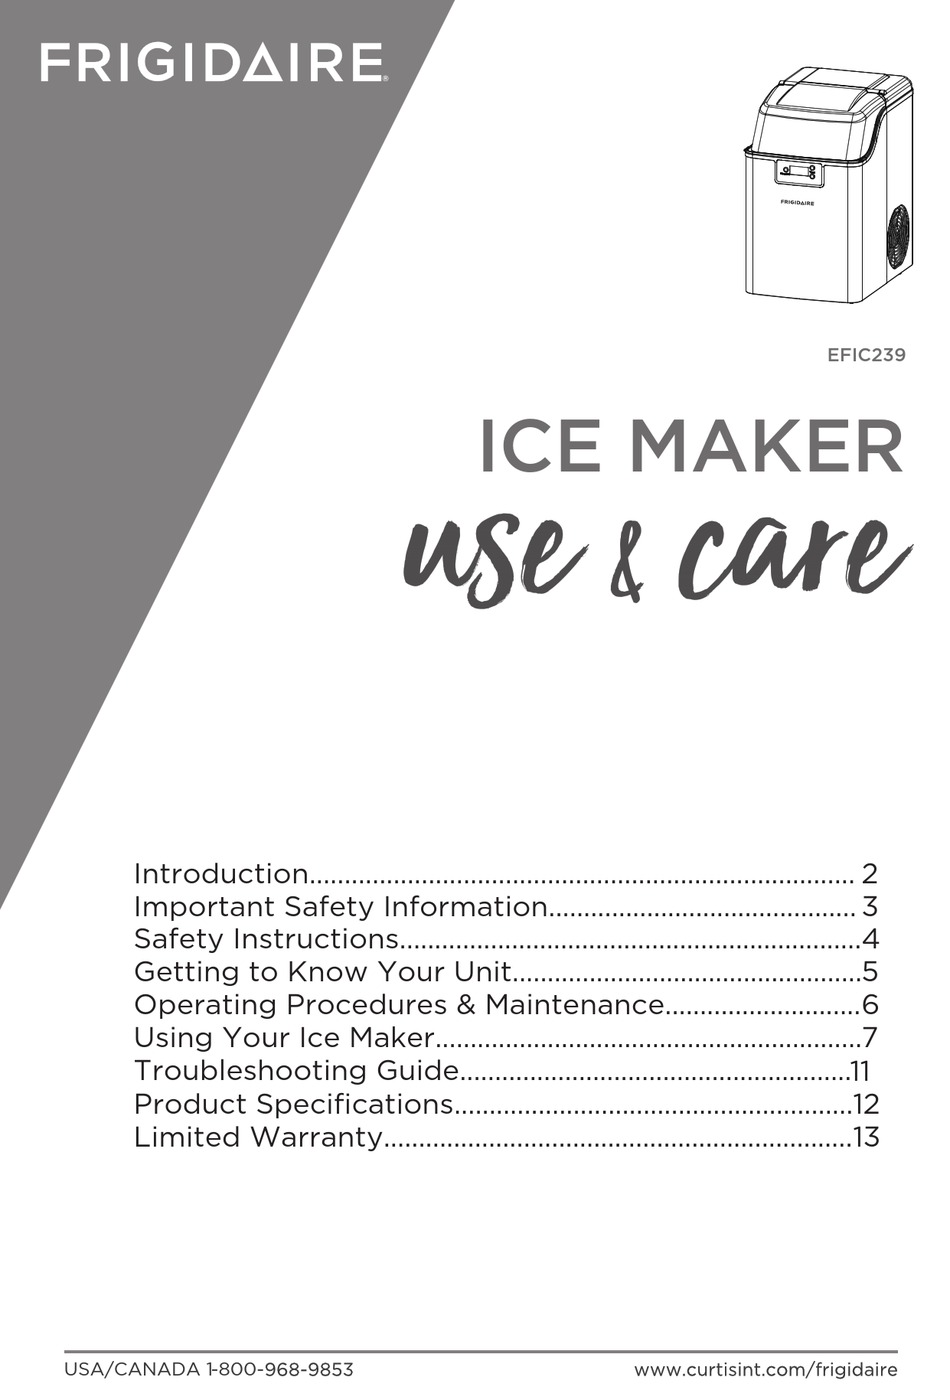 FRIGIDAIRE EFIC239 USE & CARE MANUAL Pdf Download | ManualsLib